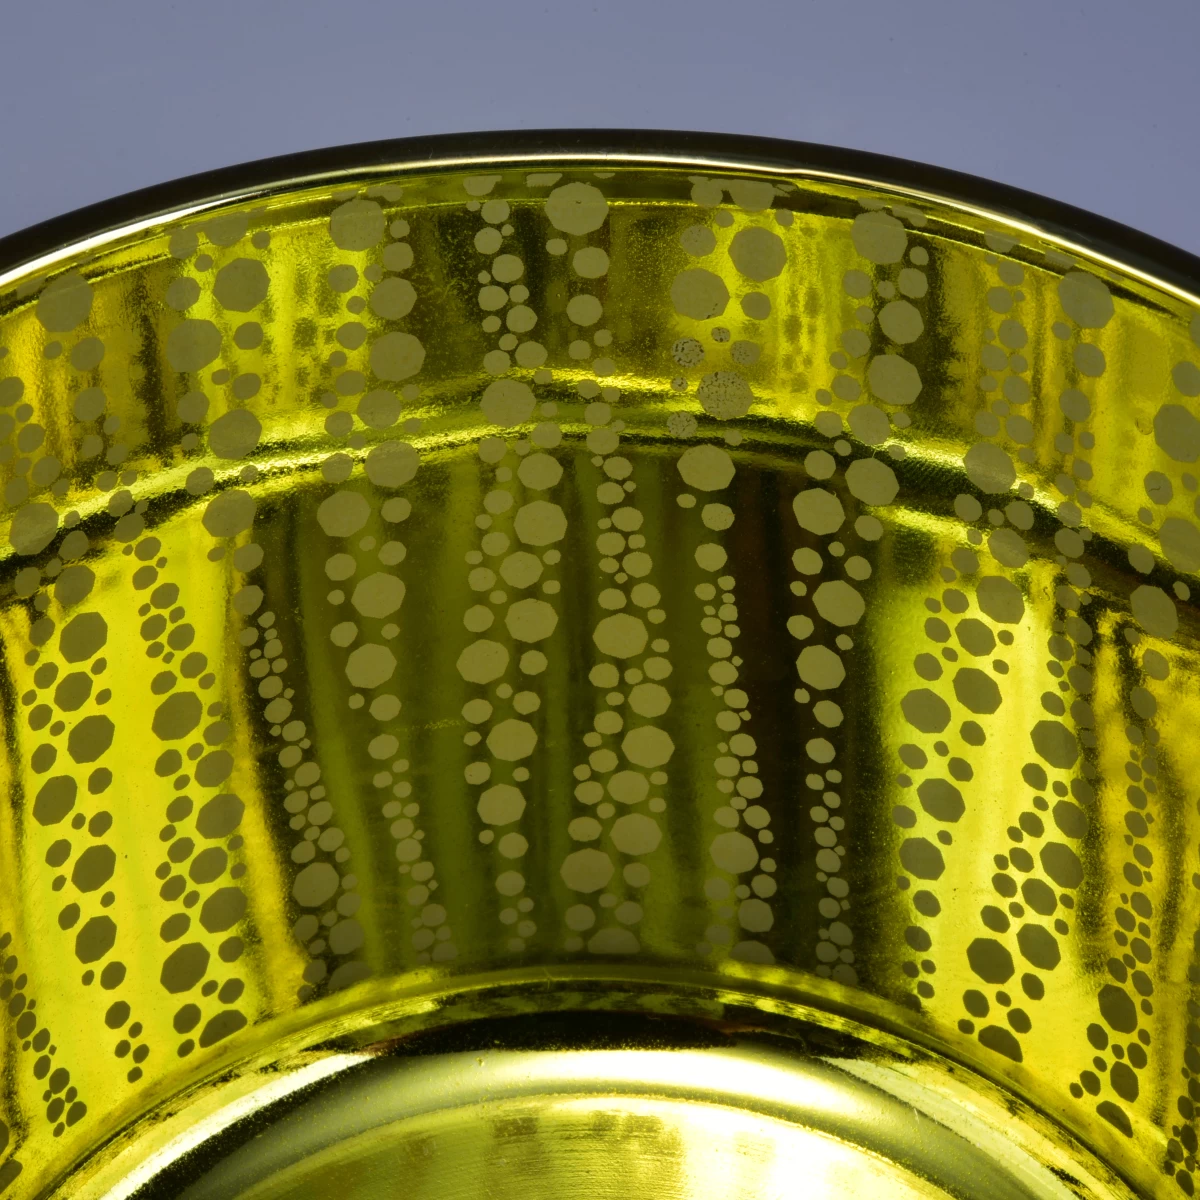 unique glass candle holder, 14oz decorative glass candle jars